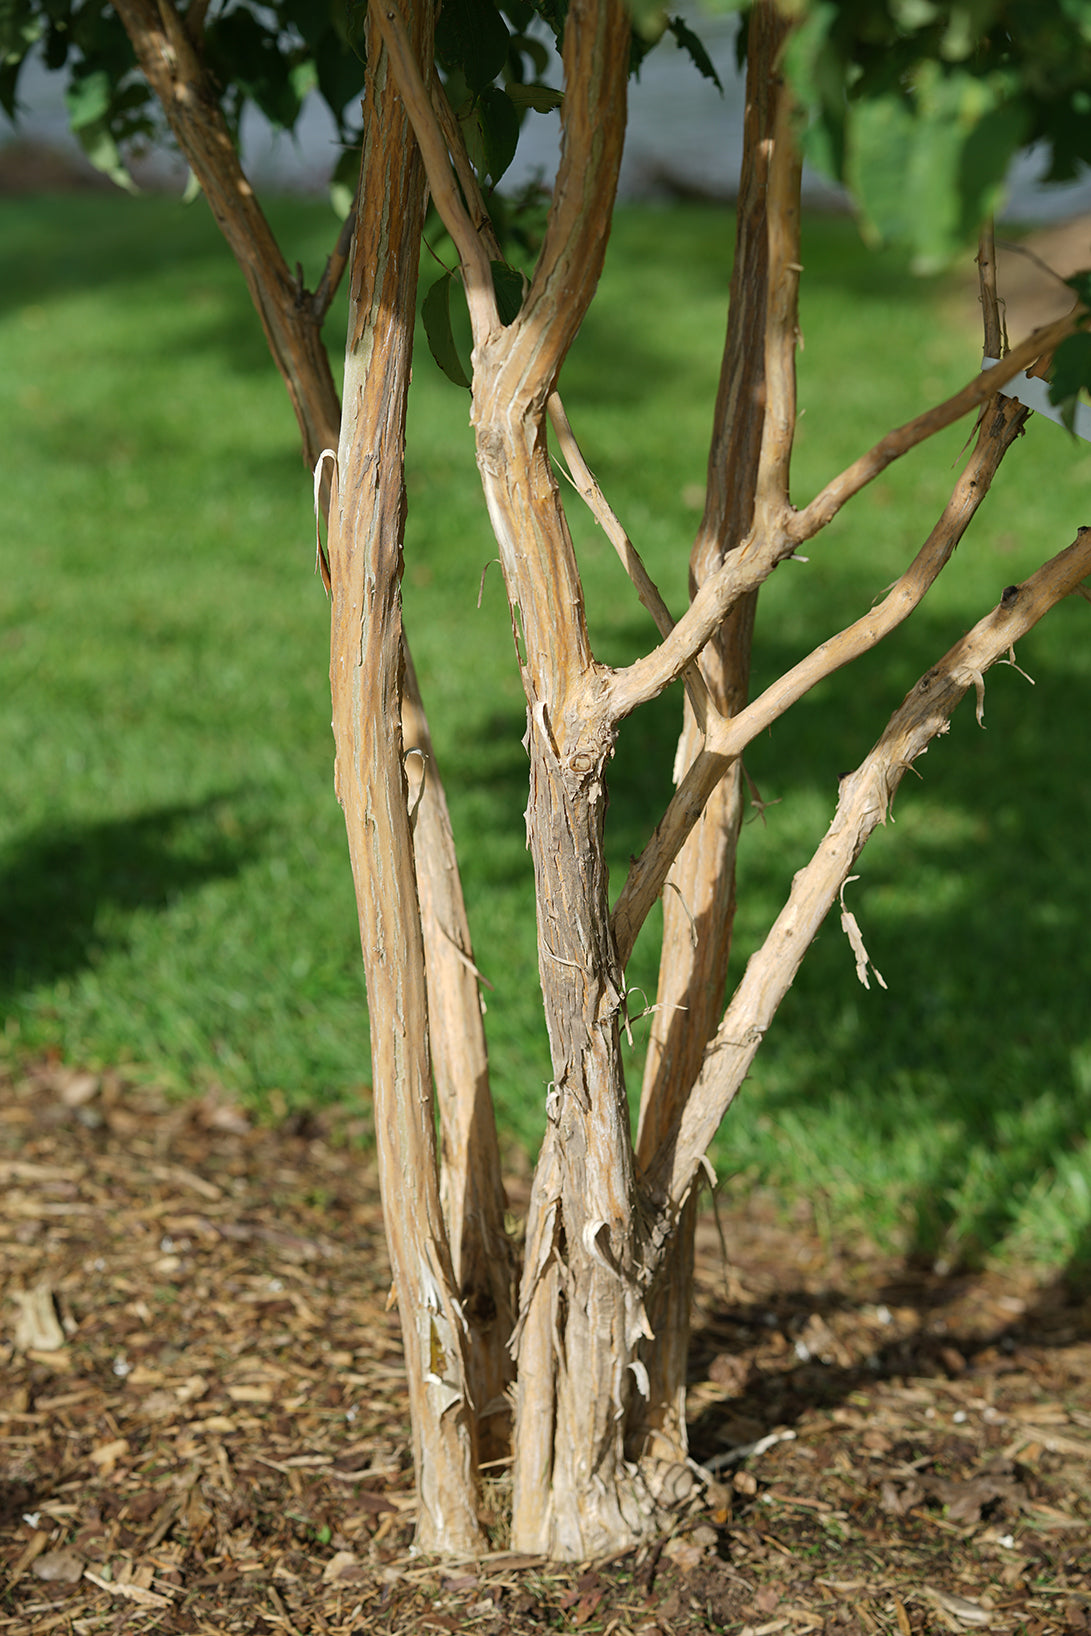 Heptacodium Temple of Bloom has naturally peeling bark